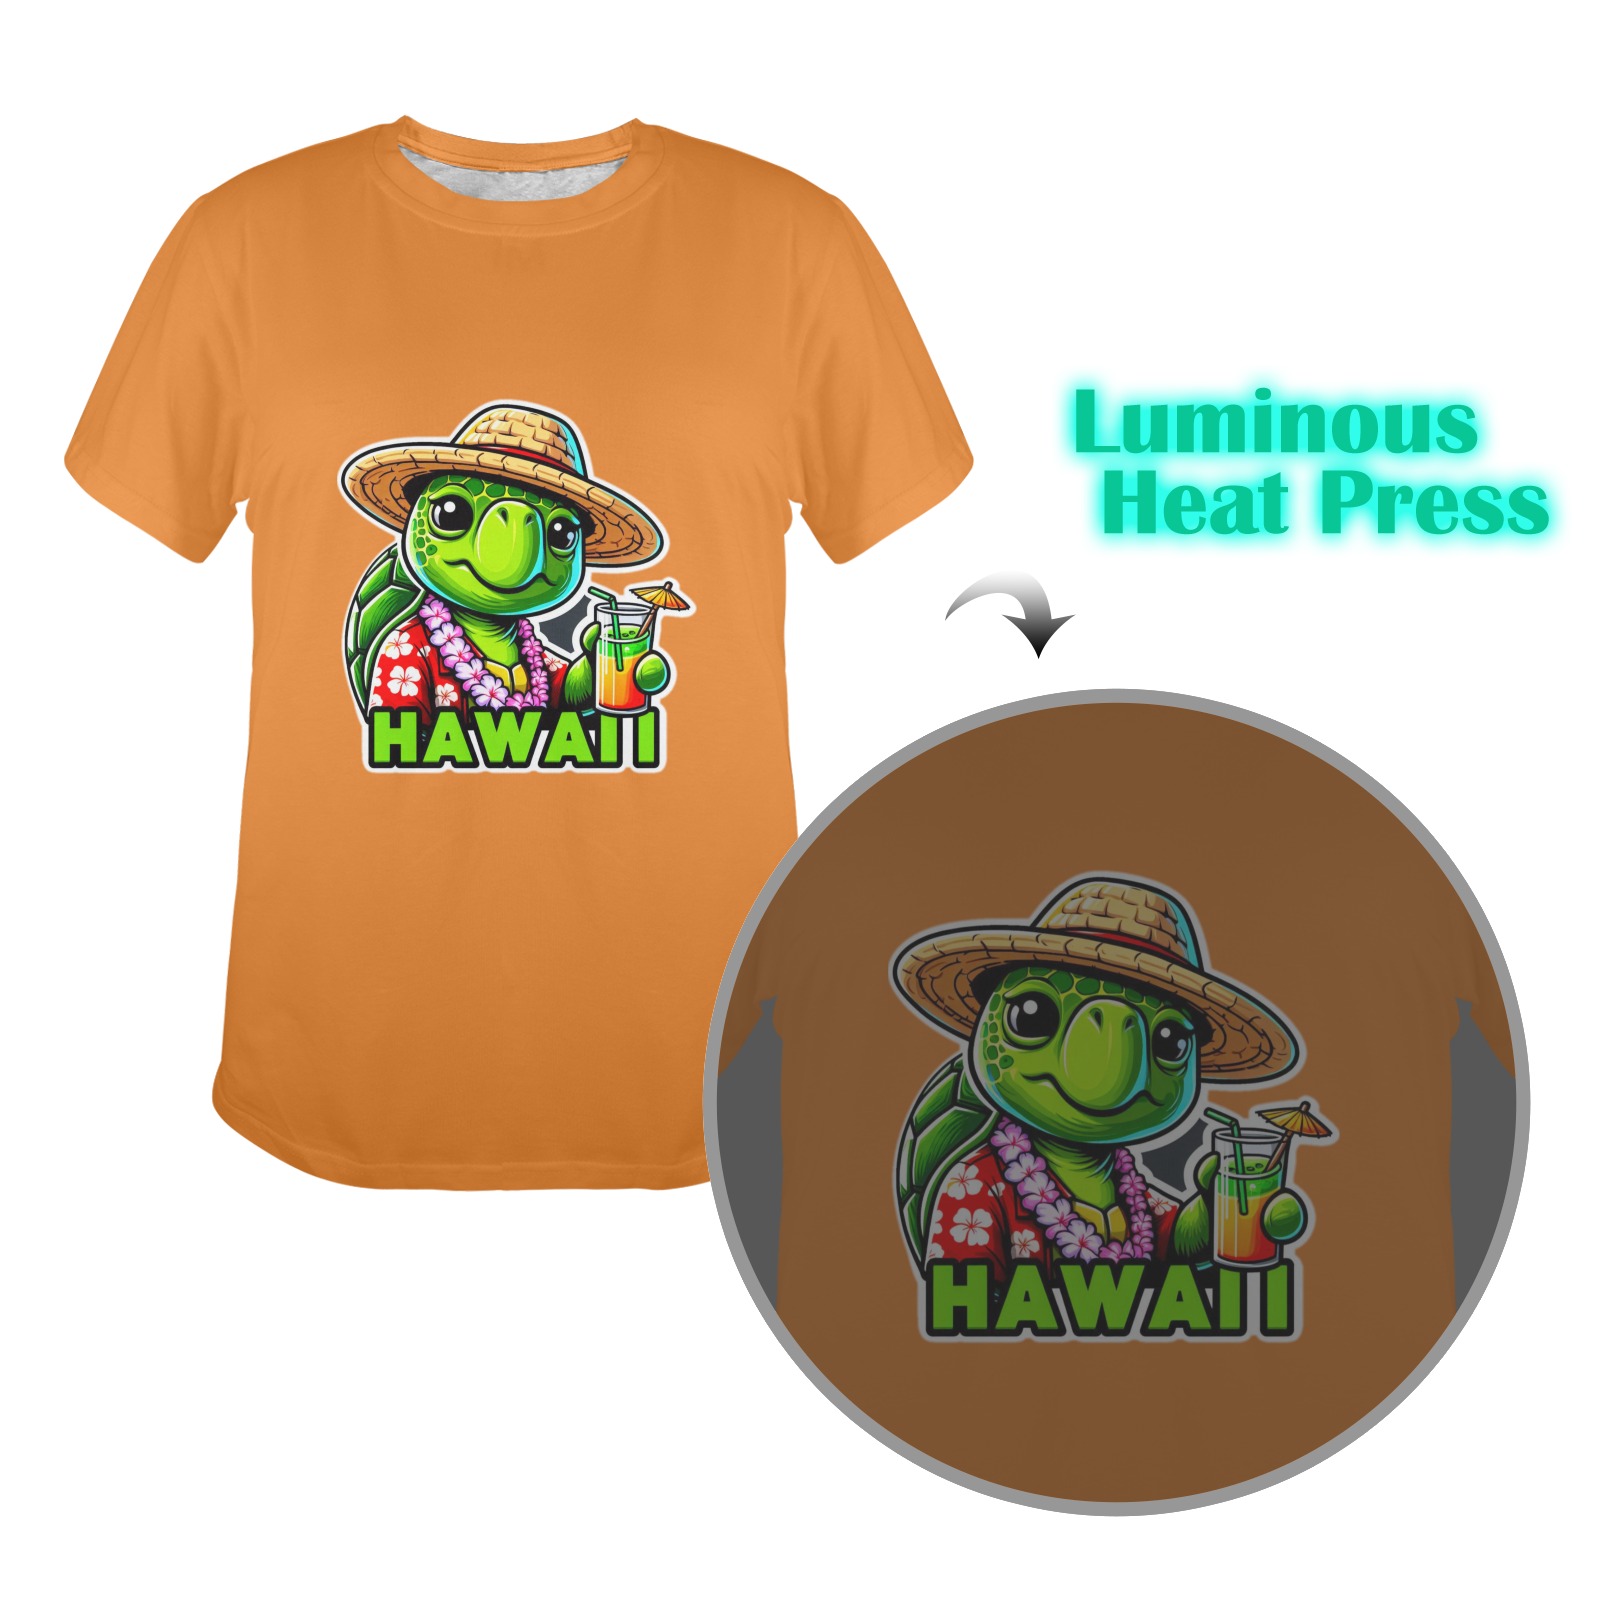 GREEN SEA TURTLE-HAWAII 3 Women's Glow in the Dark T-shirt (Two Sides Printing)